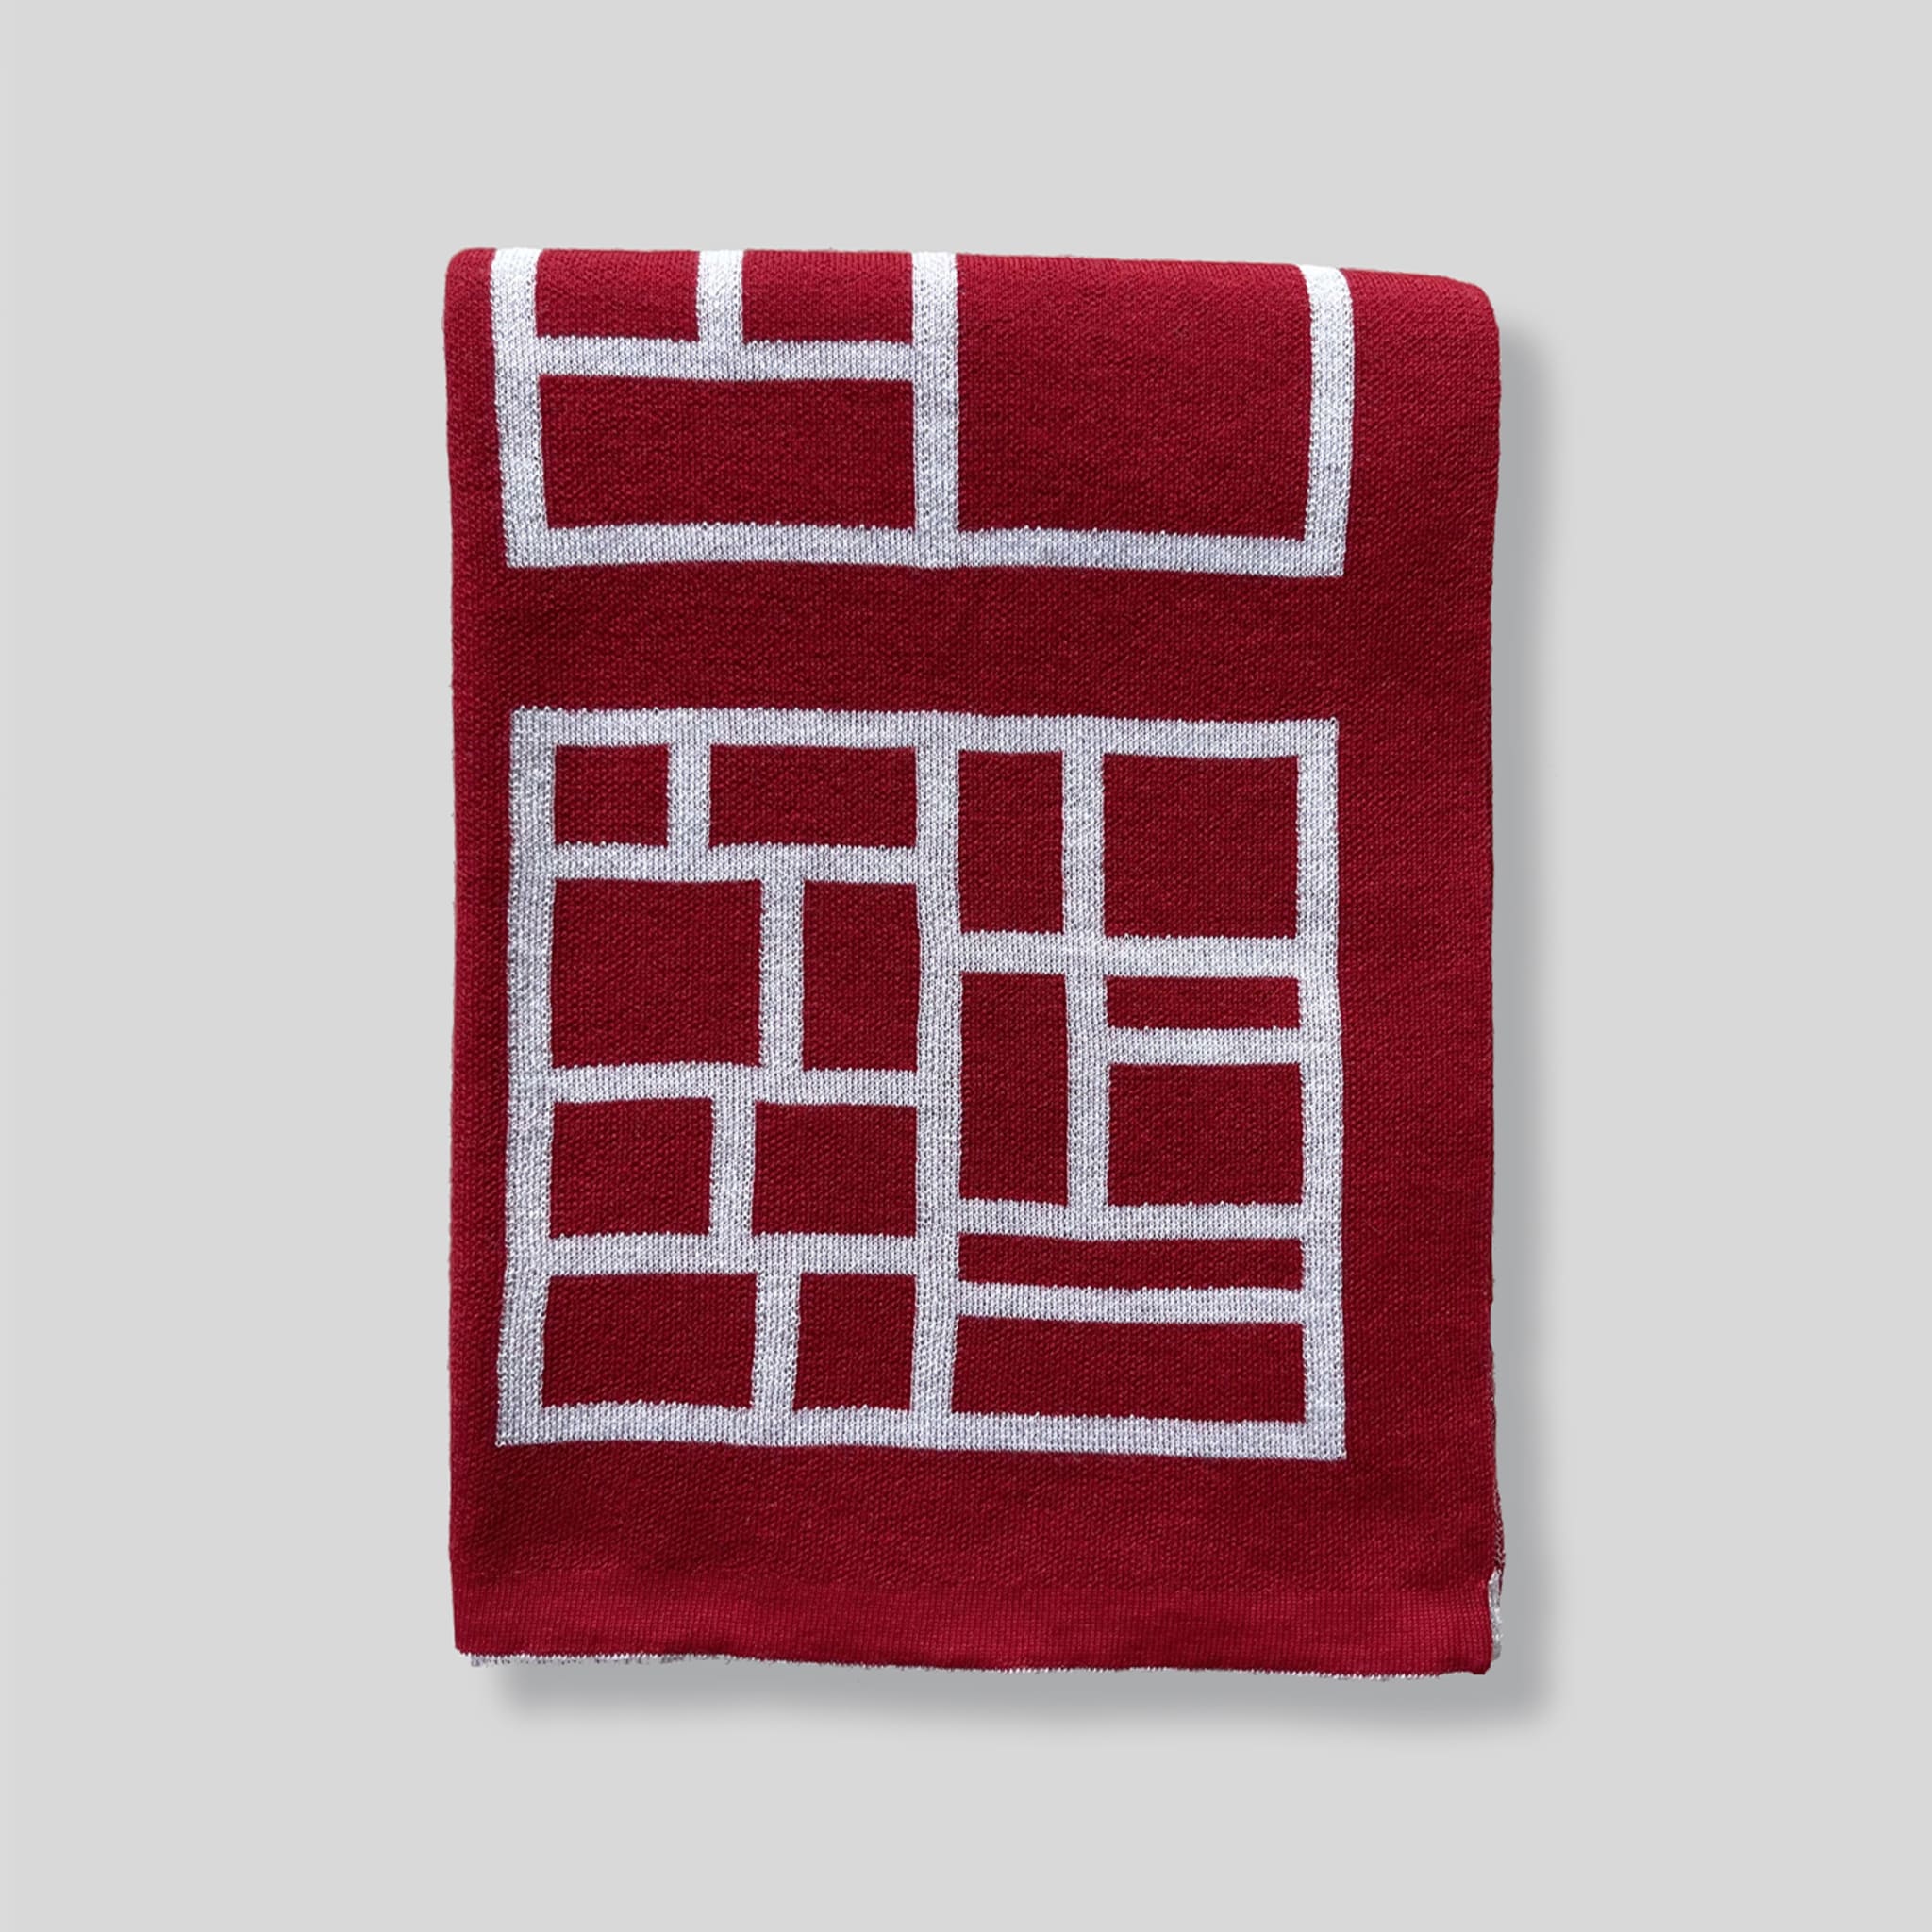 Insula Red Blanket by V. Mancini and P. Iaconantonio - Alternative view 1